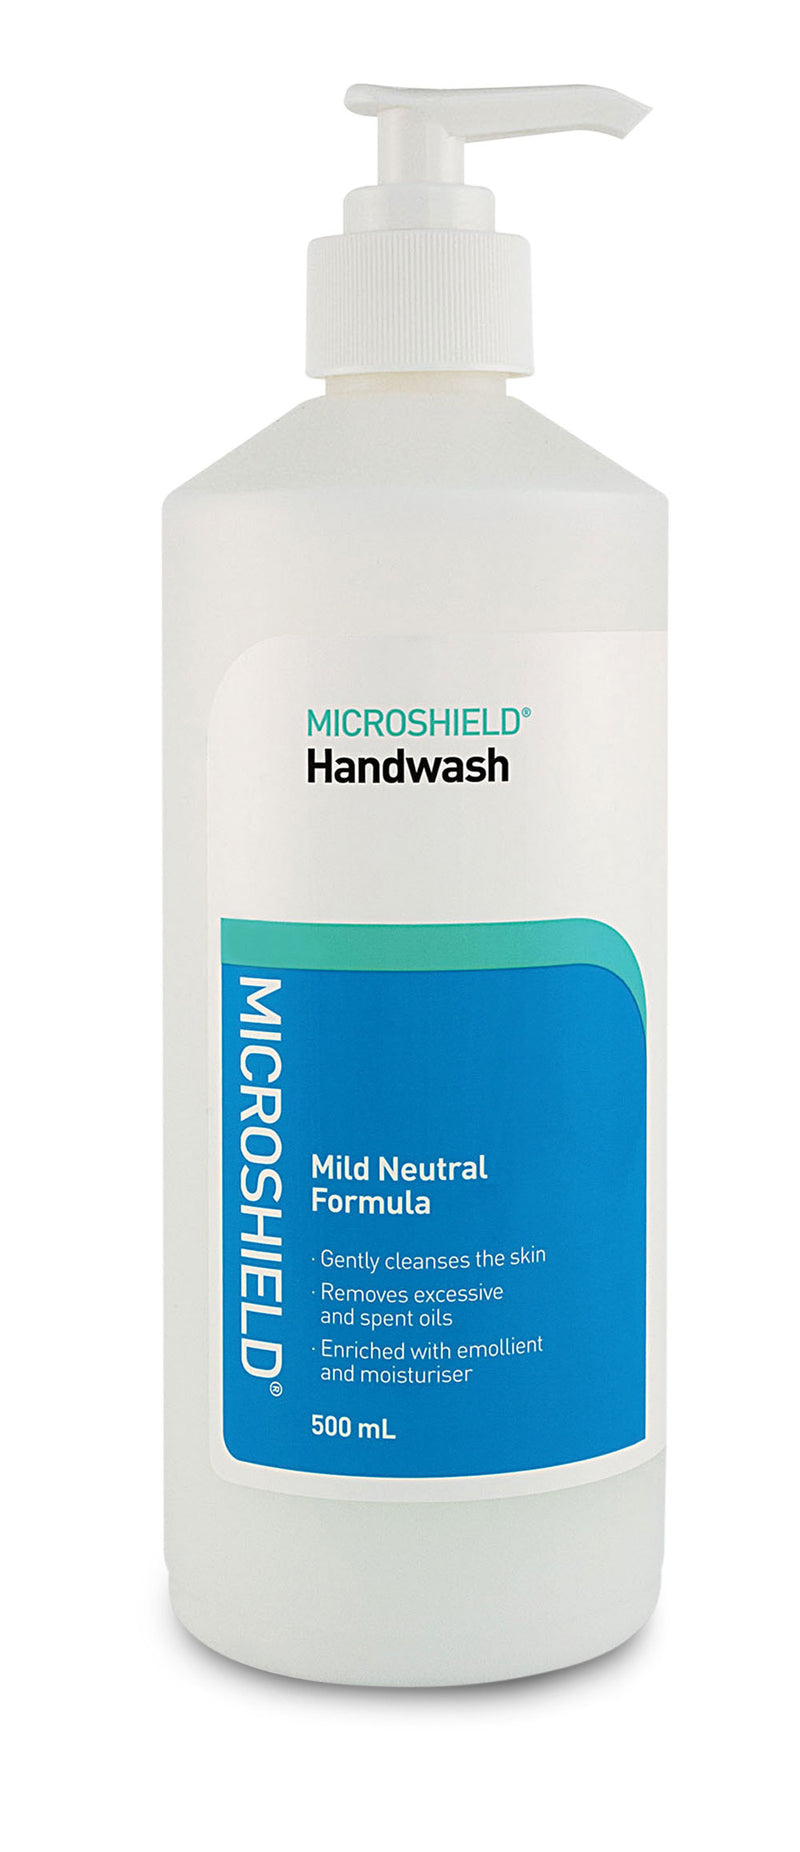 Microshield Handwash | EACH